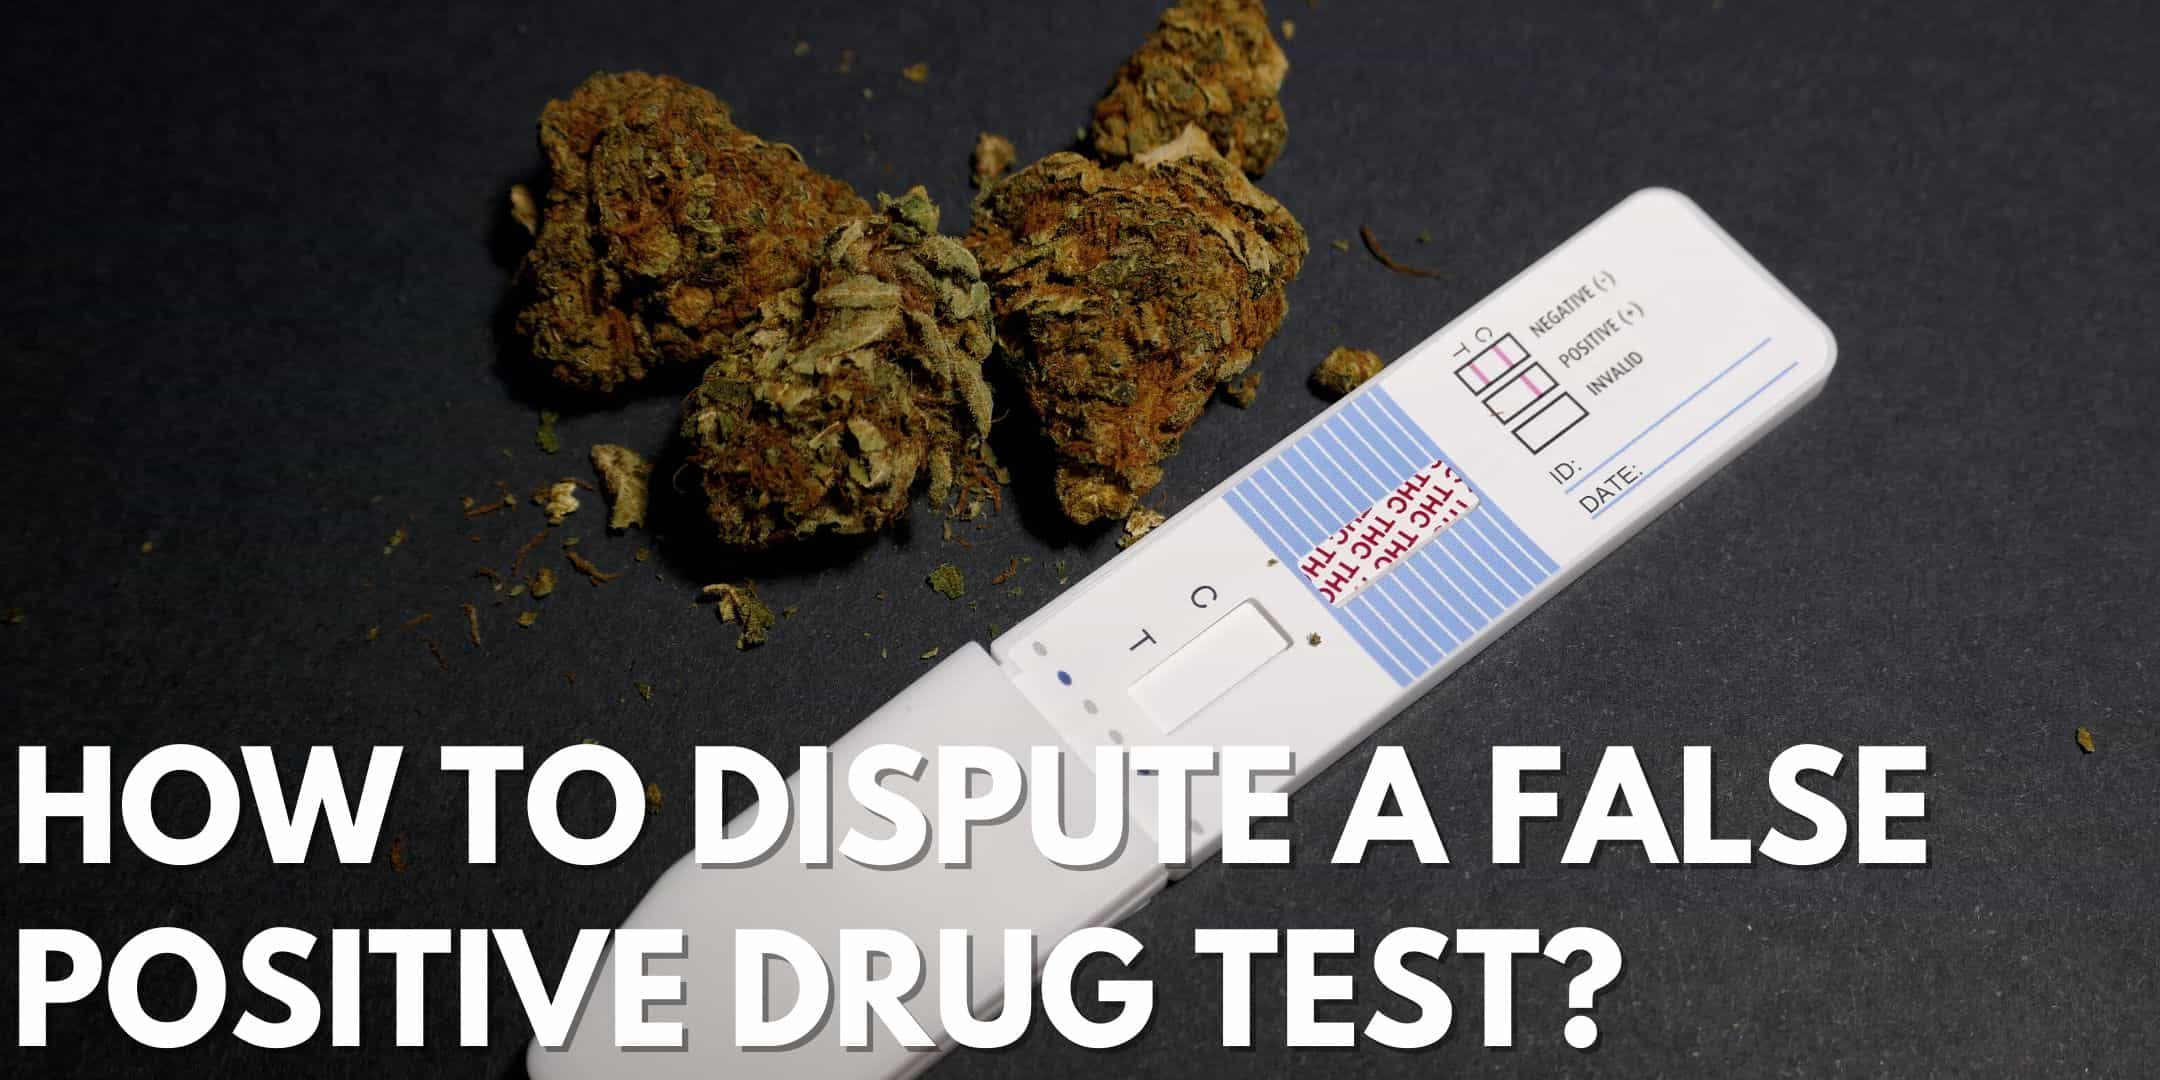 How To Dispute A False Positive Drug Test?